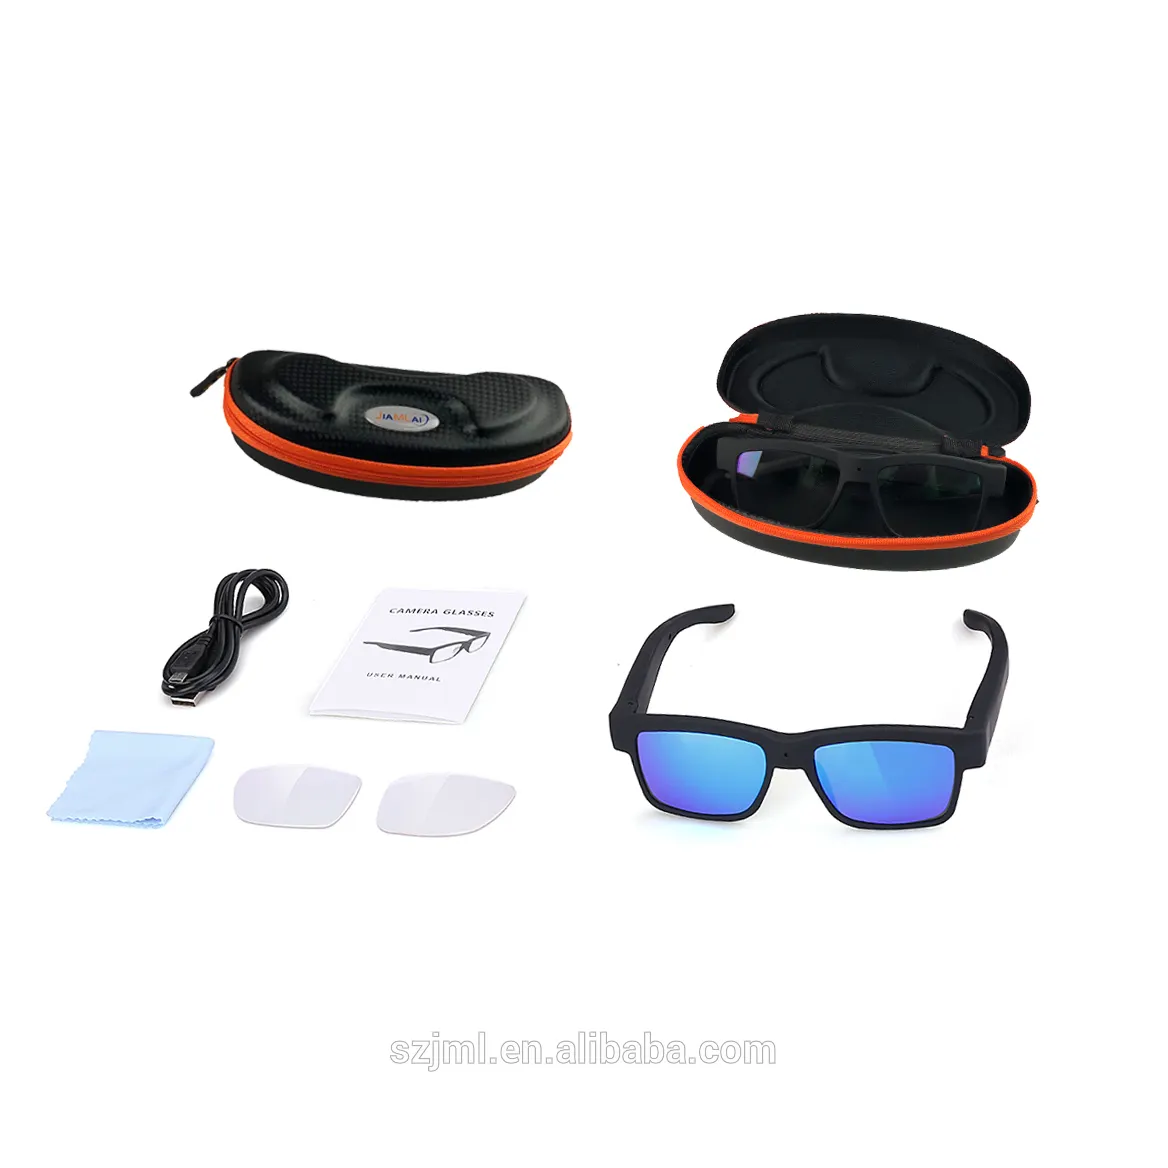 1080P HD camera glasses wireless Bt sunglasses photography sports headset smart glasses